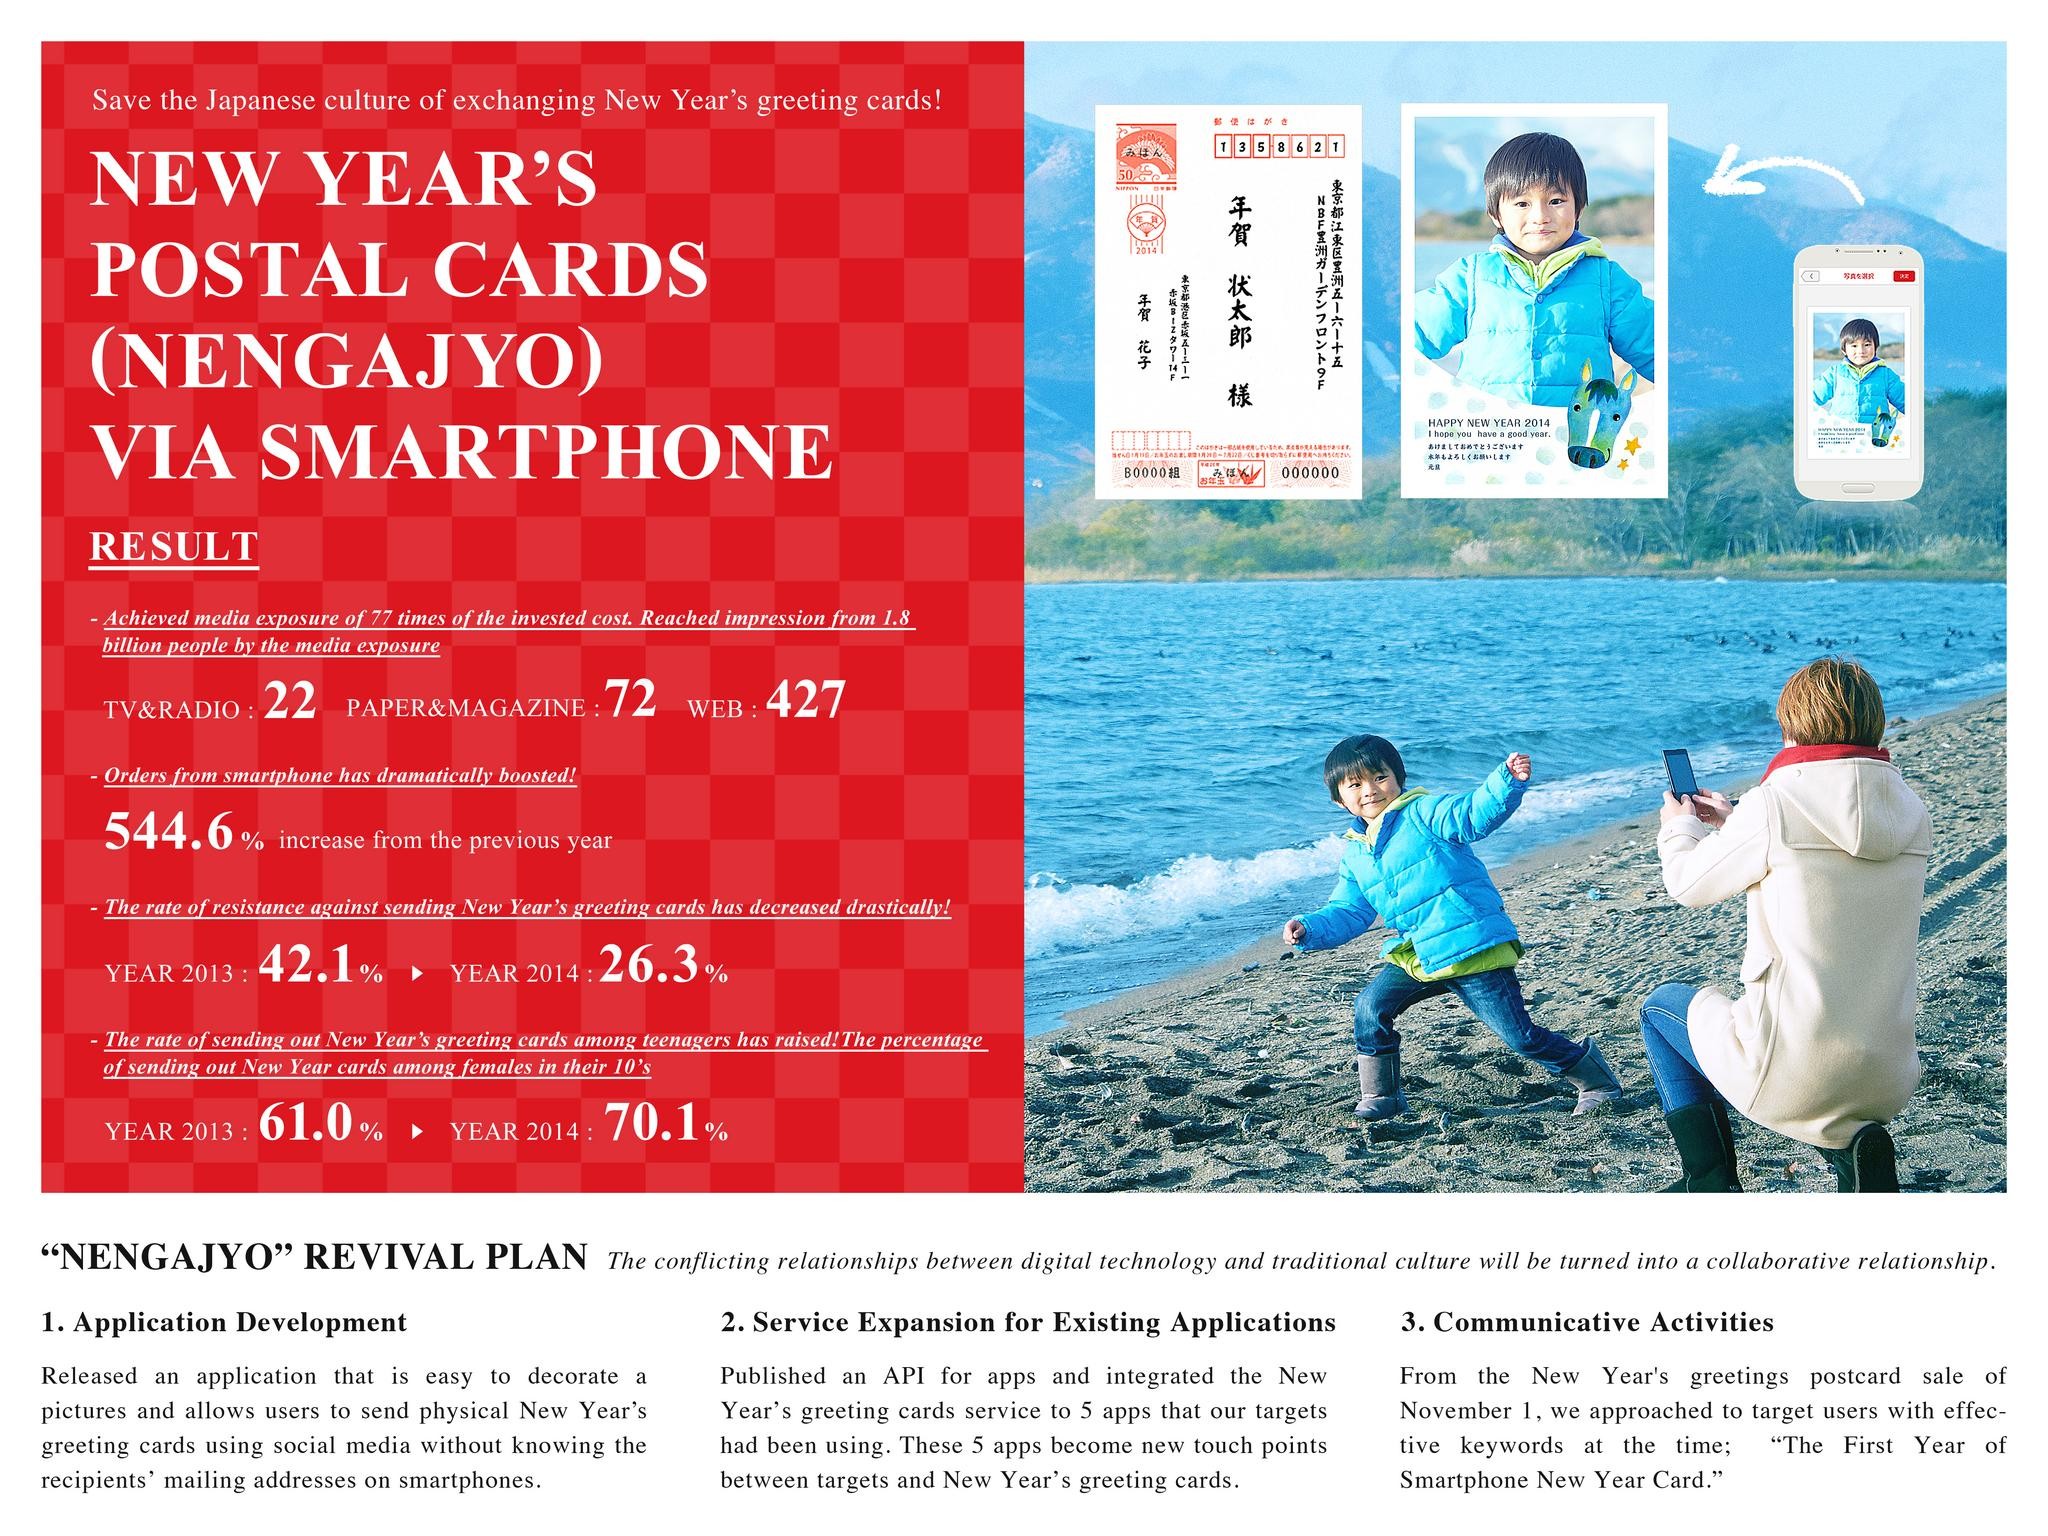 YAHOO! JAPAN NENGAJYO(NEW YEAR'S POSTAL CARDS)